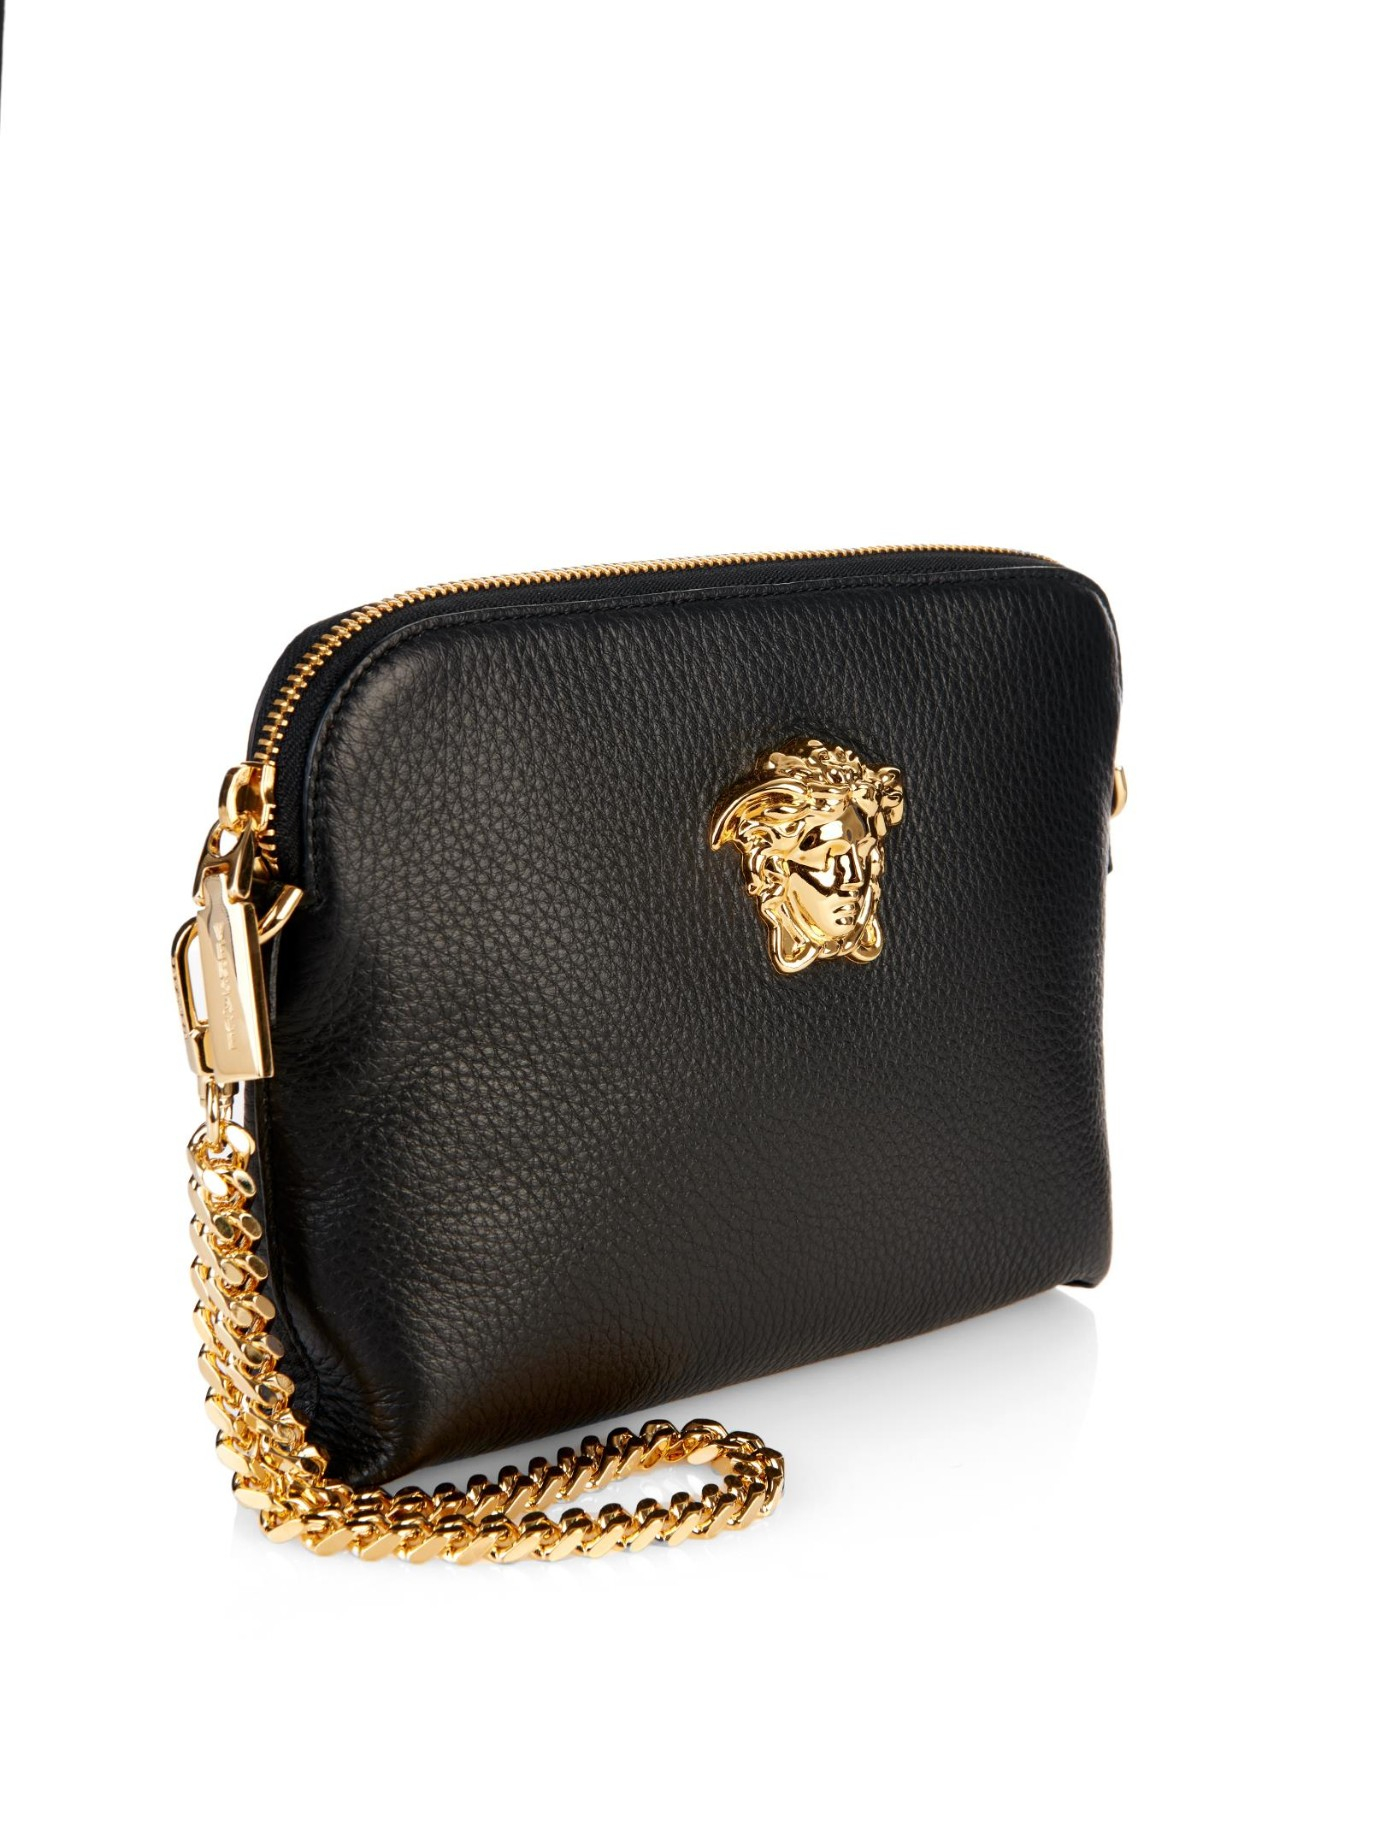 Versace Medusa Idol Leather Clutch in Gold (Black) | Lyst